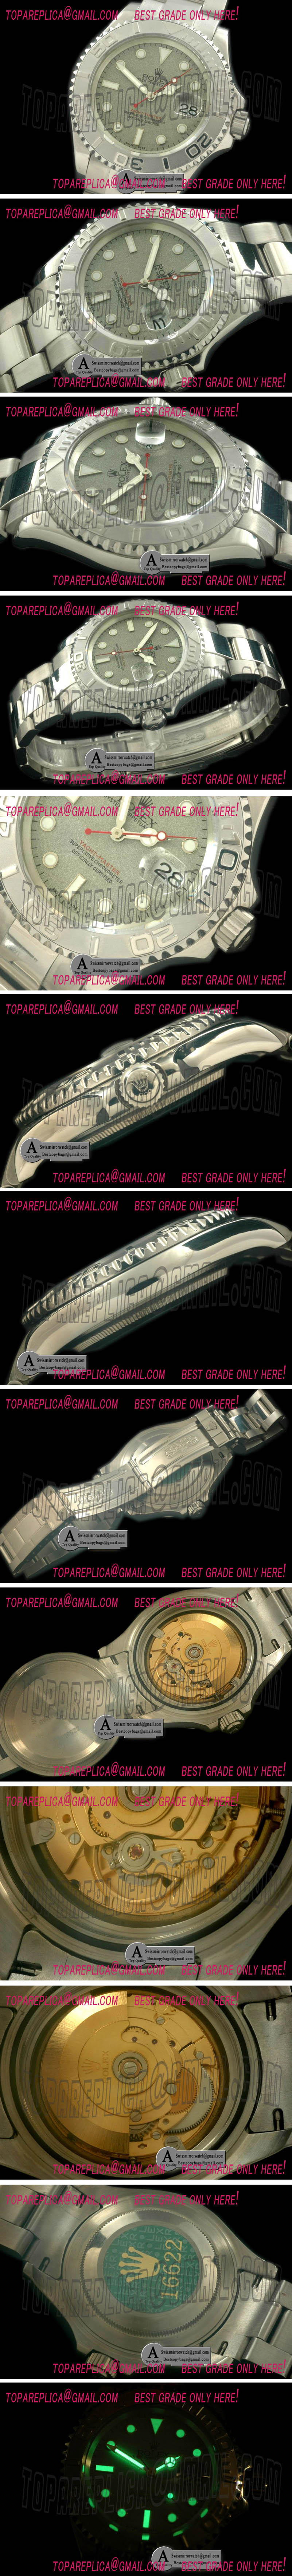 Rolex Yacht Master TW Best SS Rolesium Dial Swiss Eta 2836-2 Replica Watches